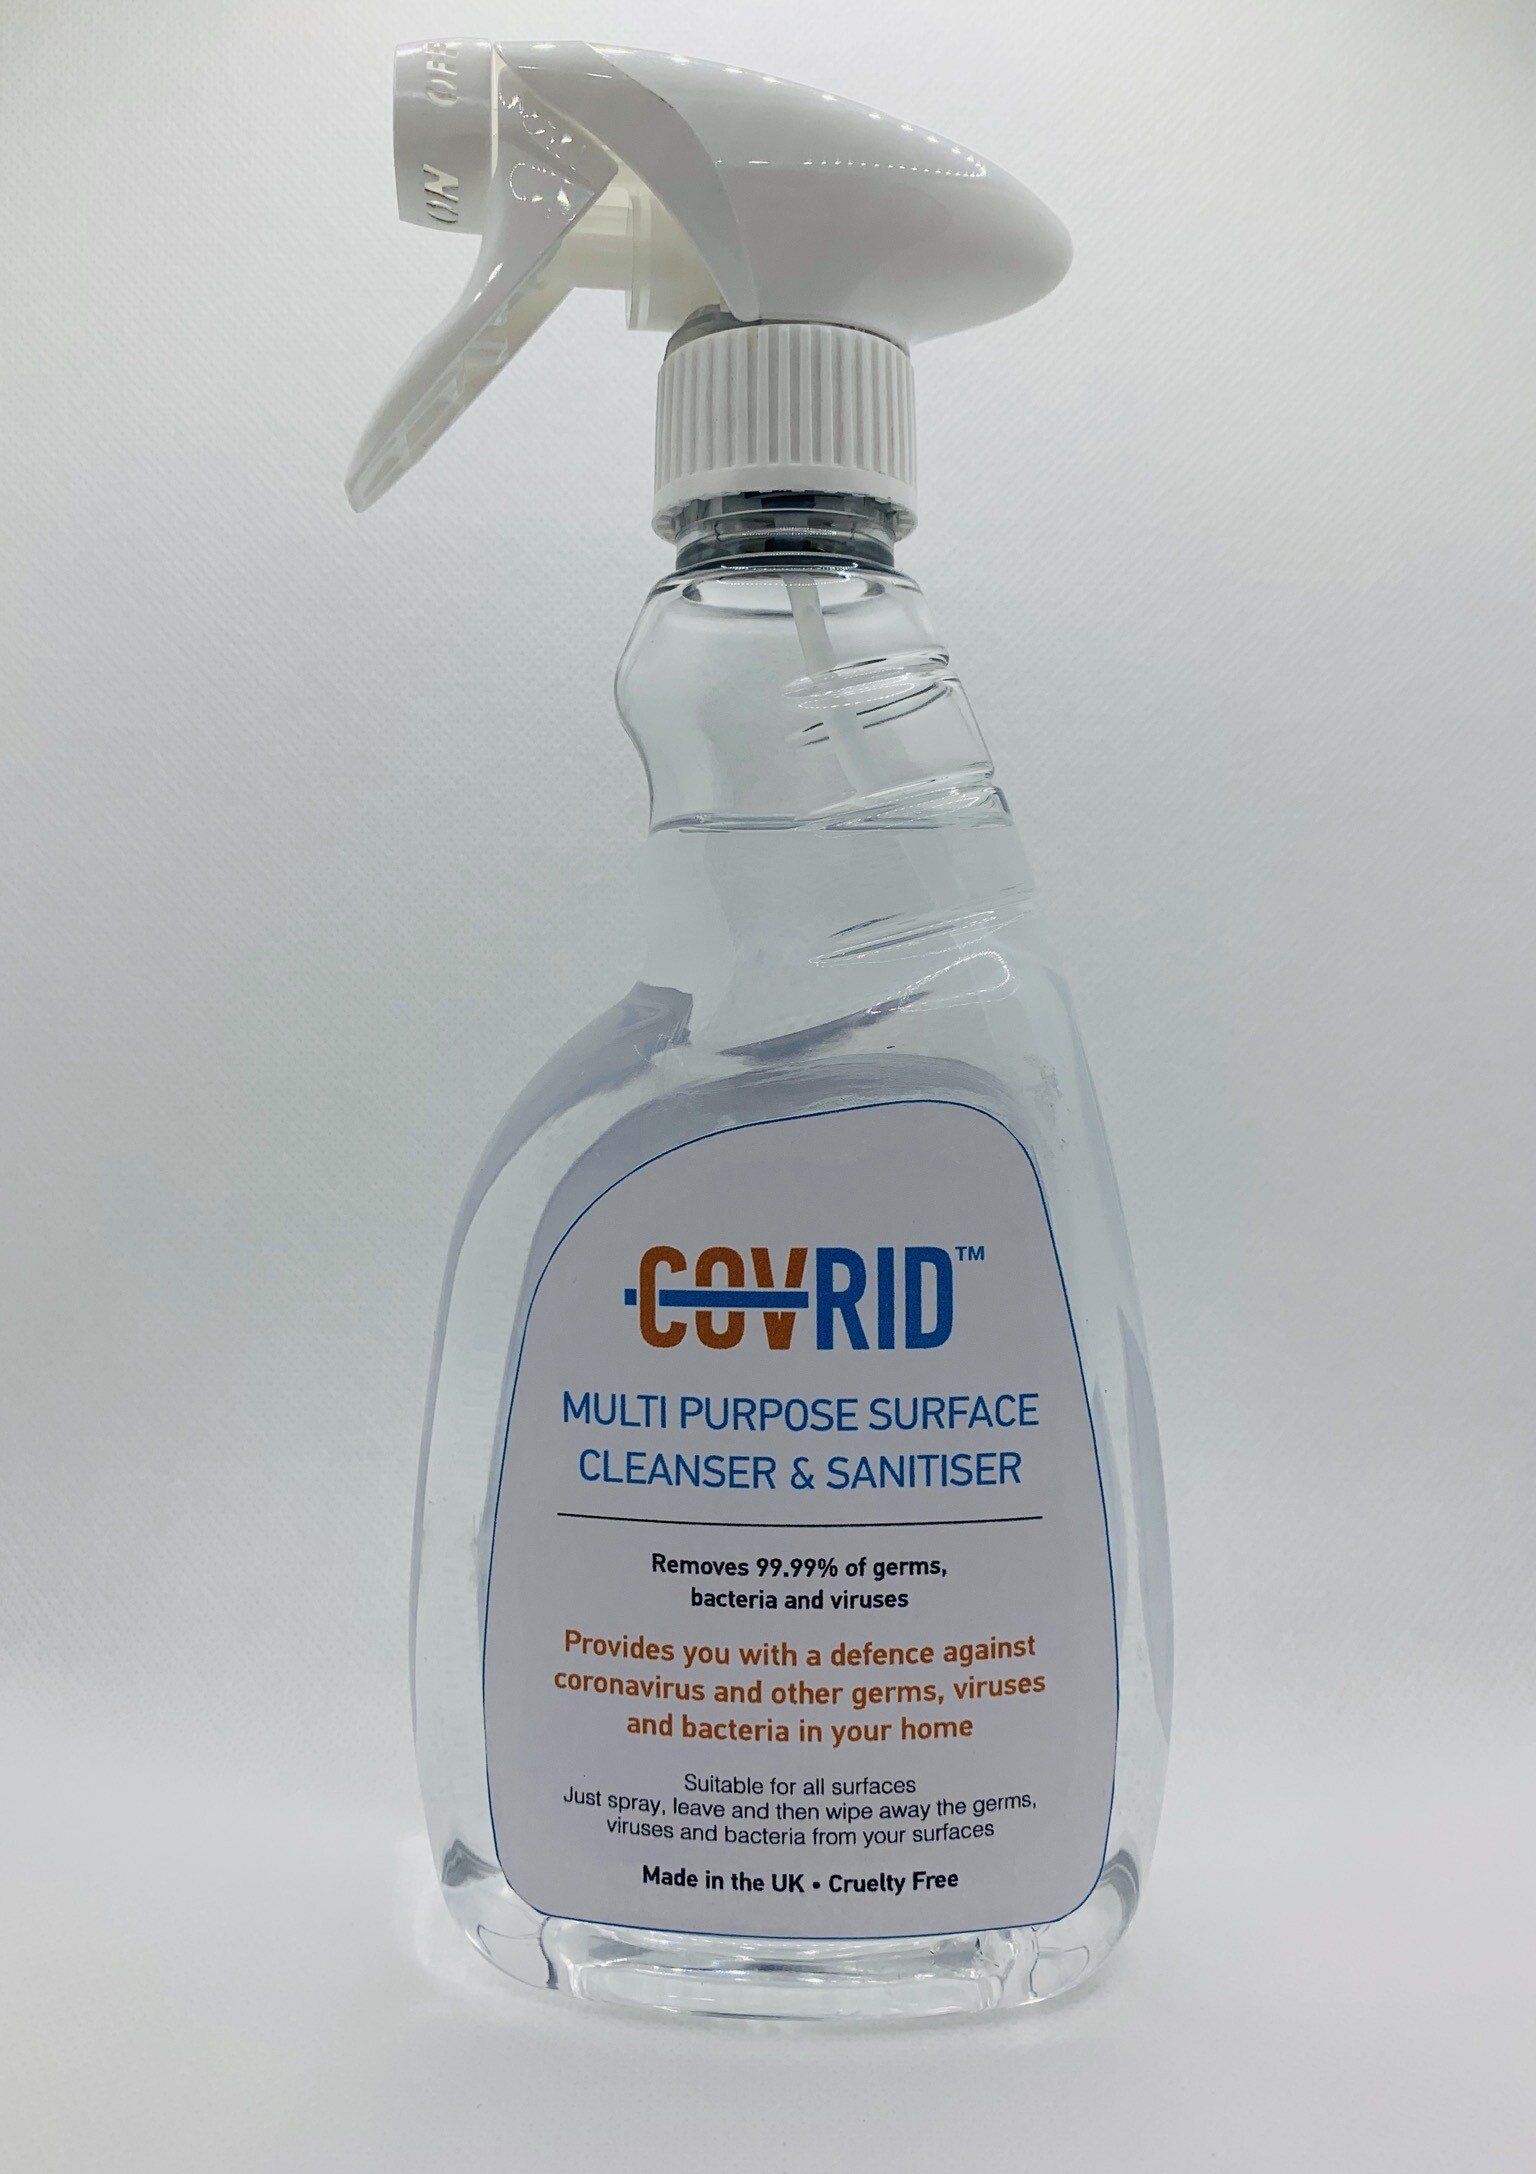 COV-RID Multi Purpose Surface cleanser and sanitiser 500ml Bottle